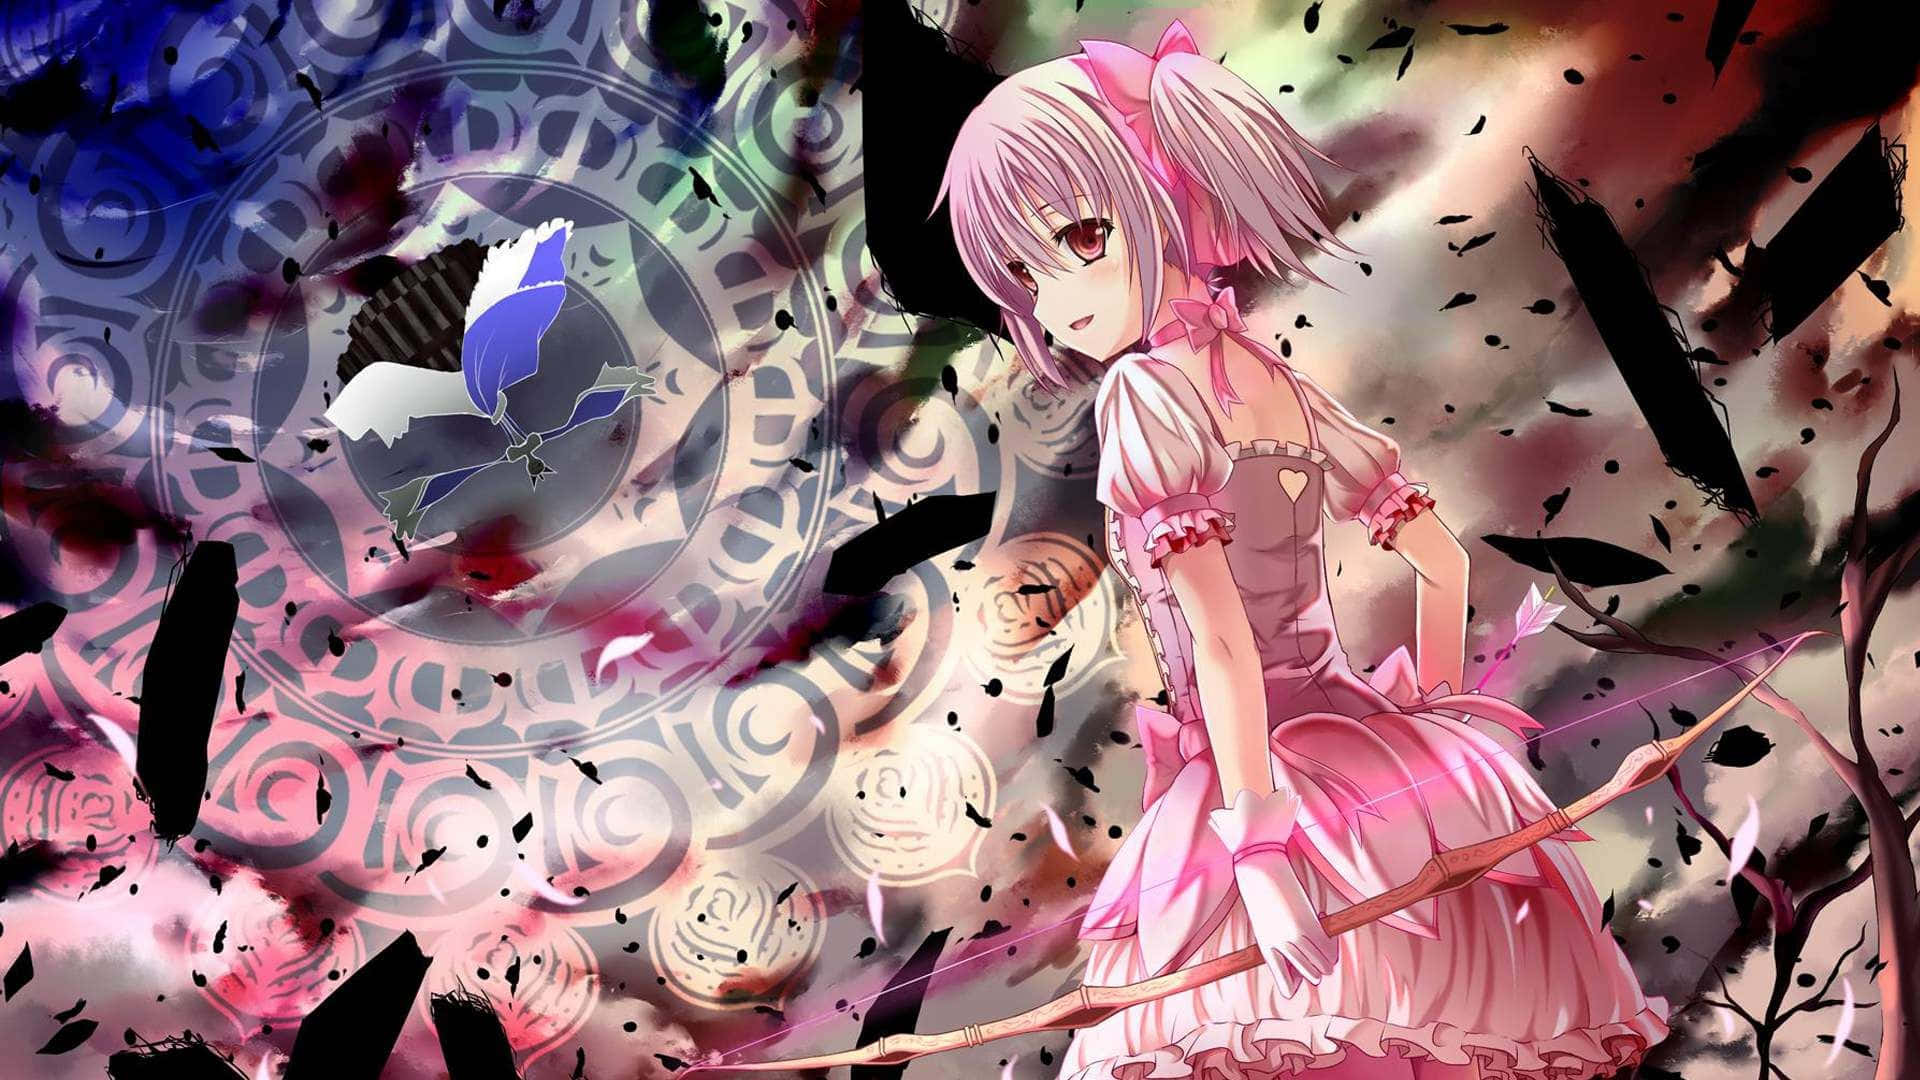 De magiske piger fra Puella Magi Madoka Magica står højt i al deres pink glorie. Wallpaper